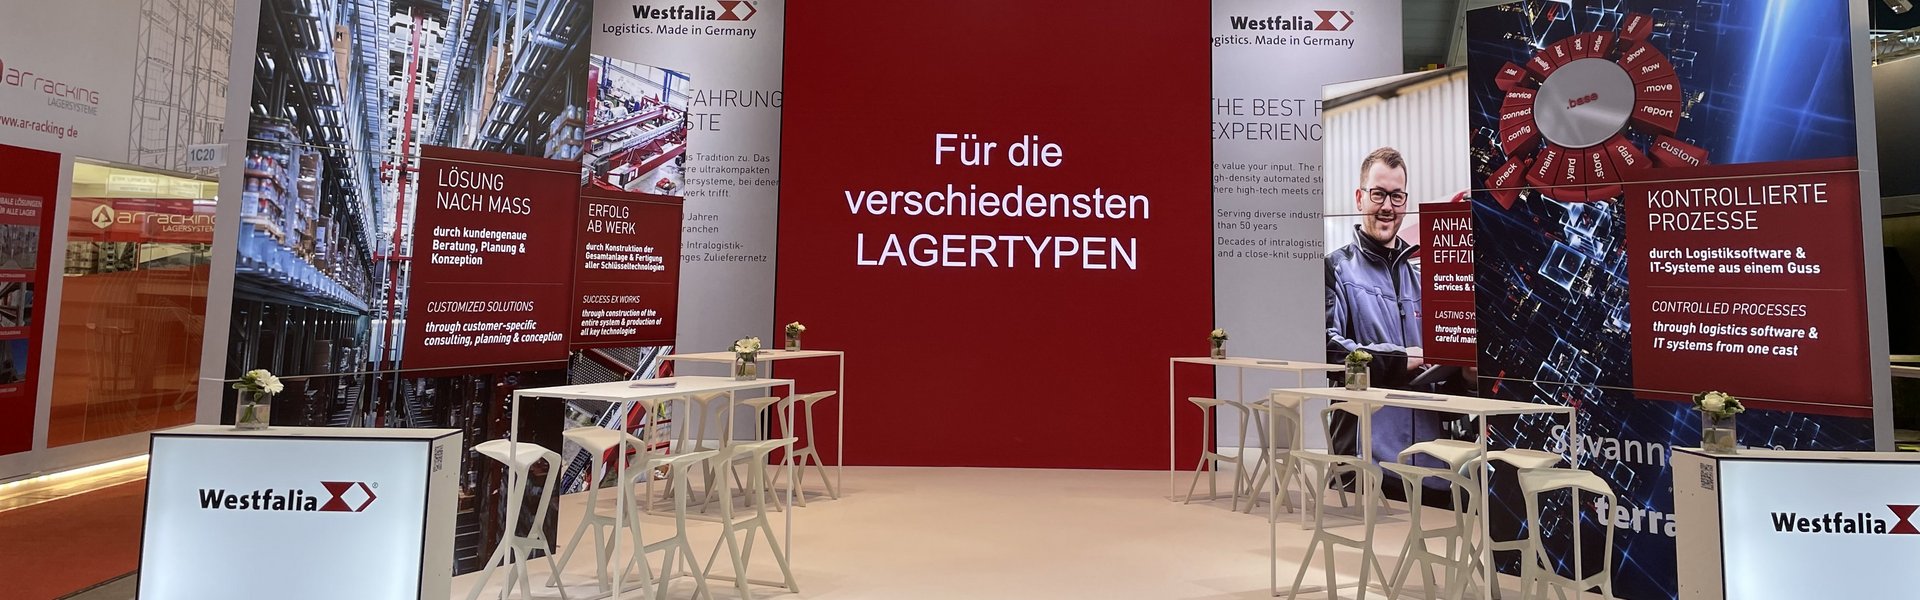 LogiMAT-Messestand Westfalia Technologies GmbH & Co. KG